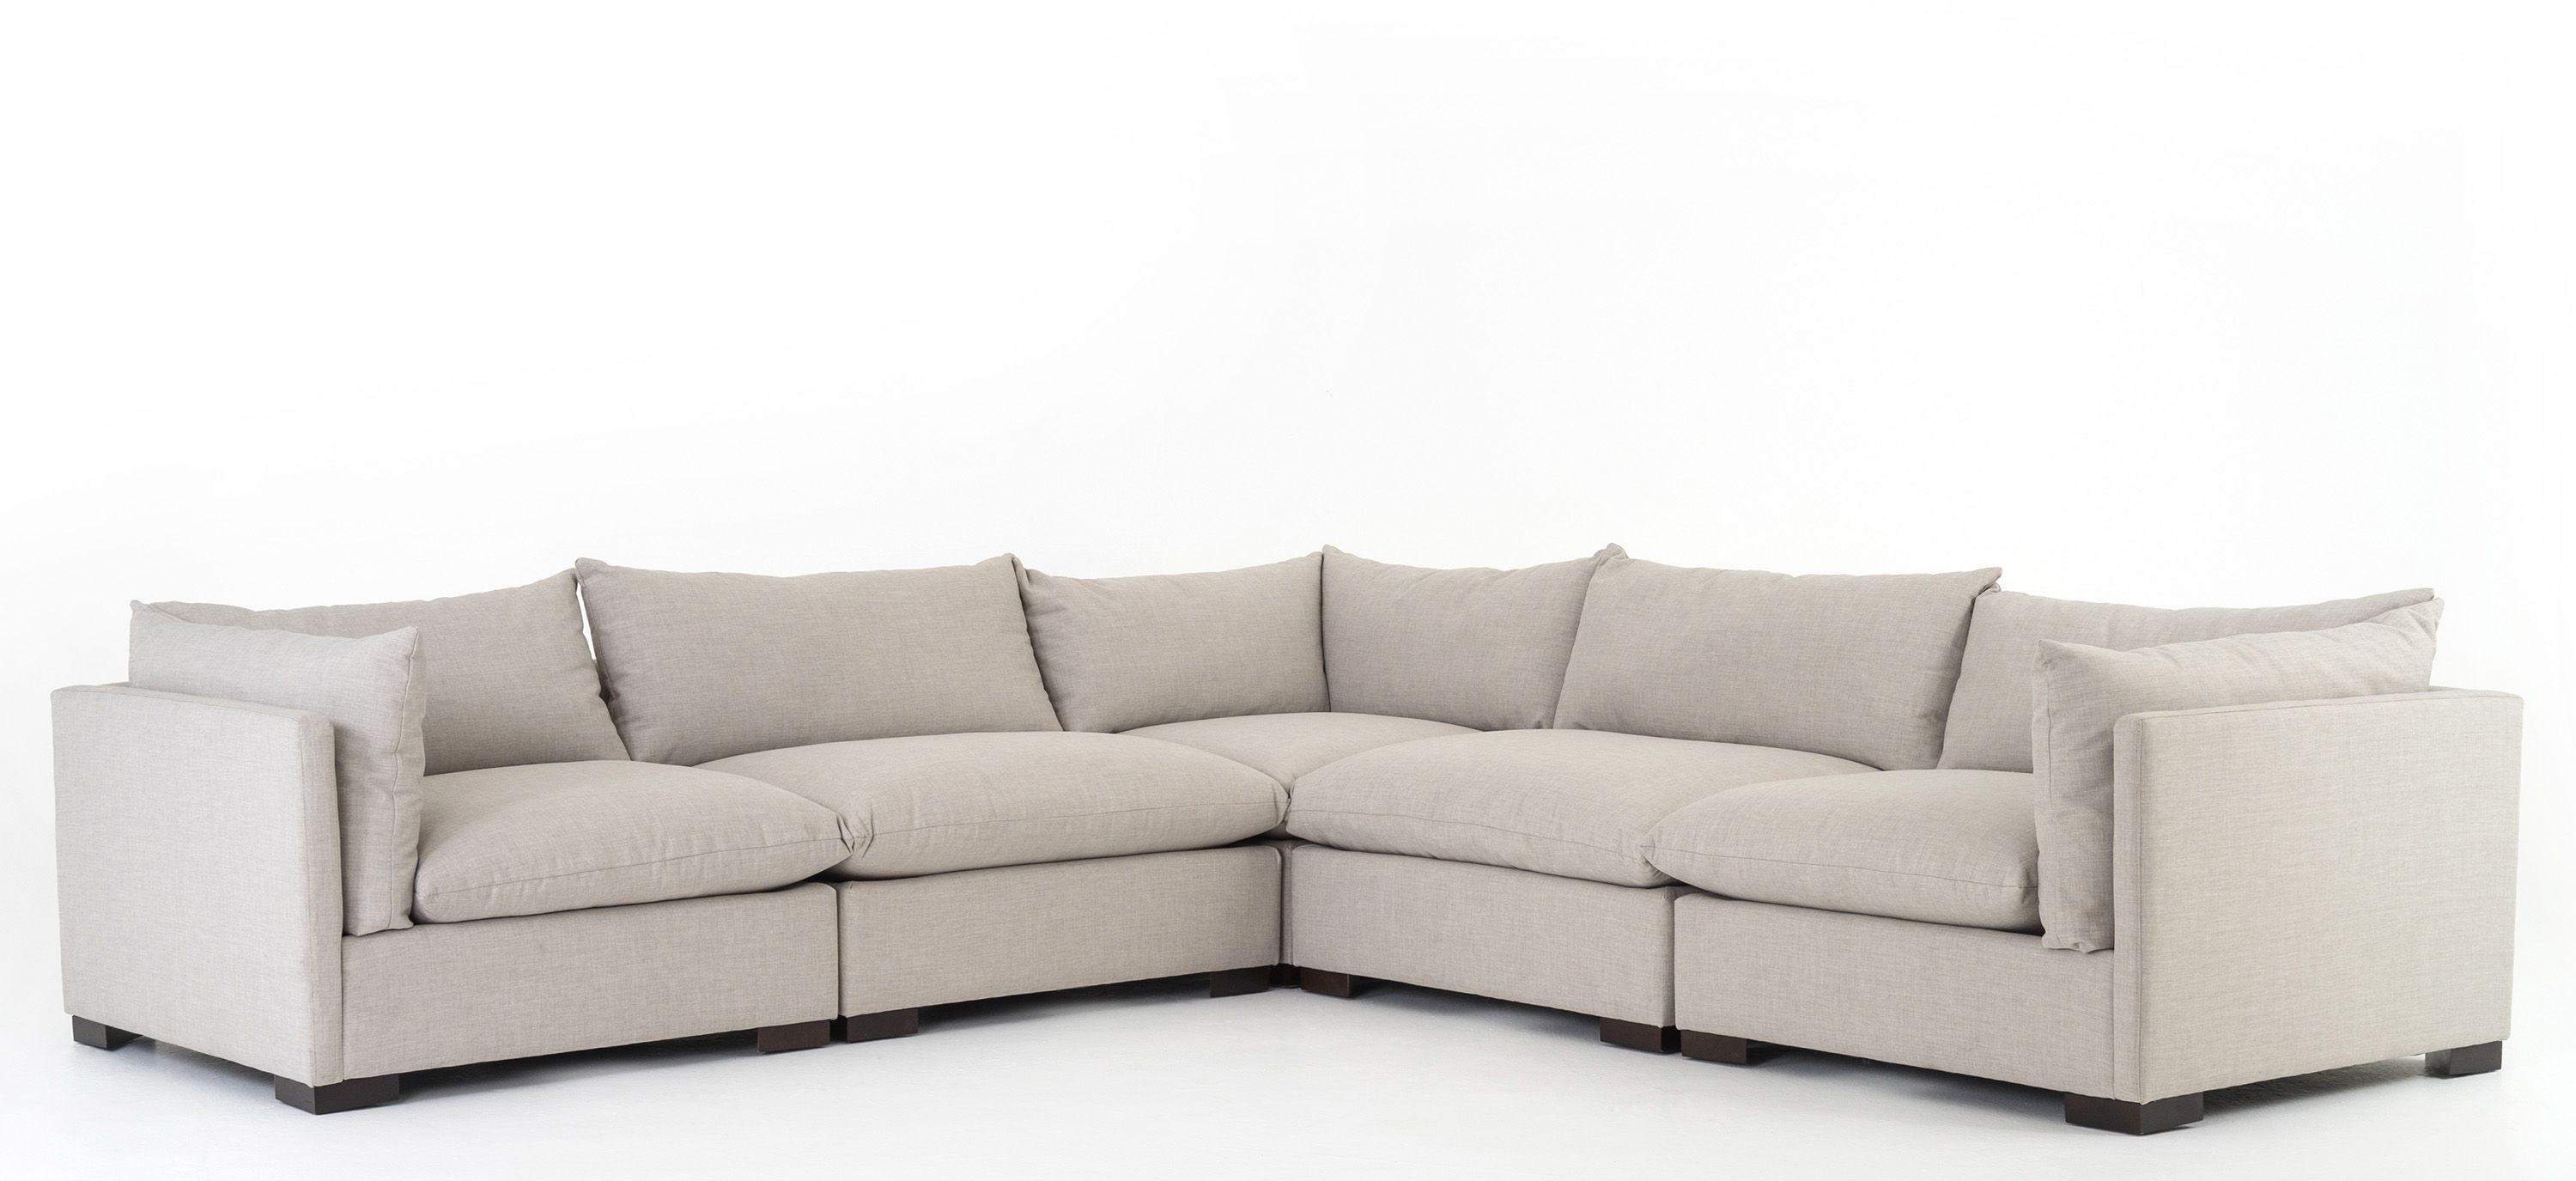 Westwood 5-pc. Modular Sectional Sofa